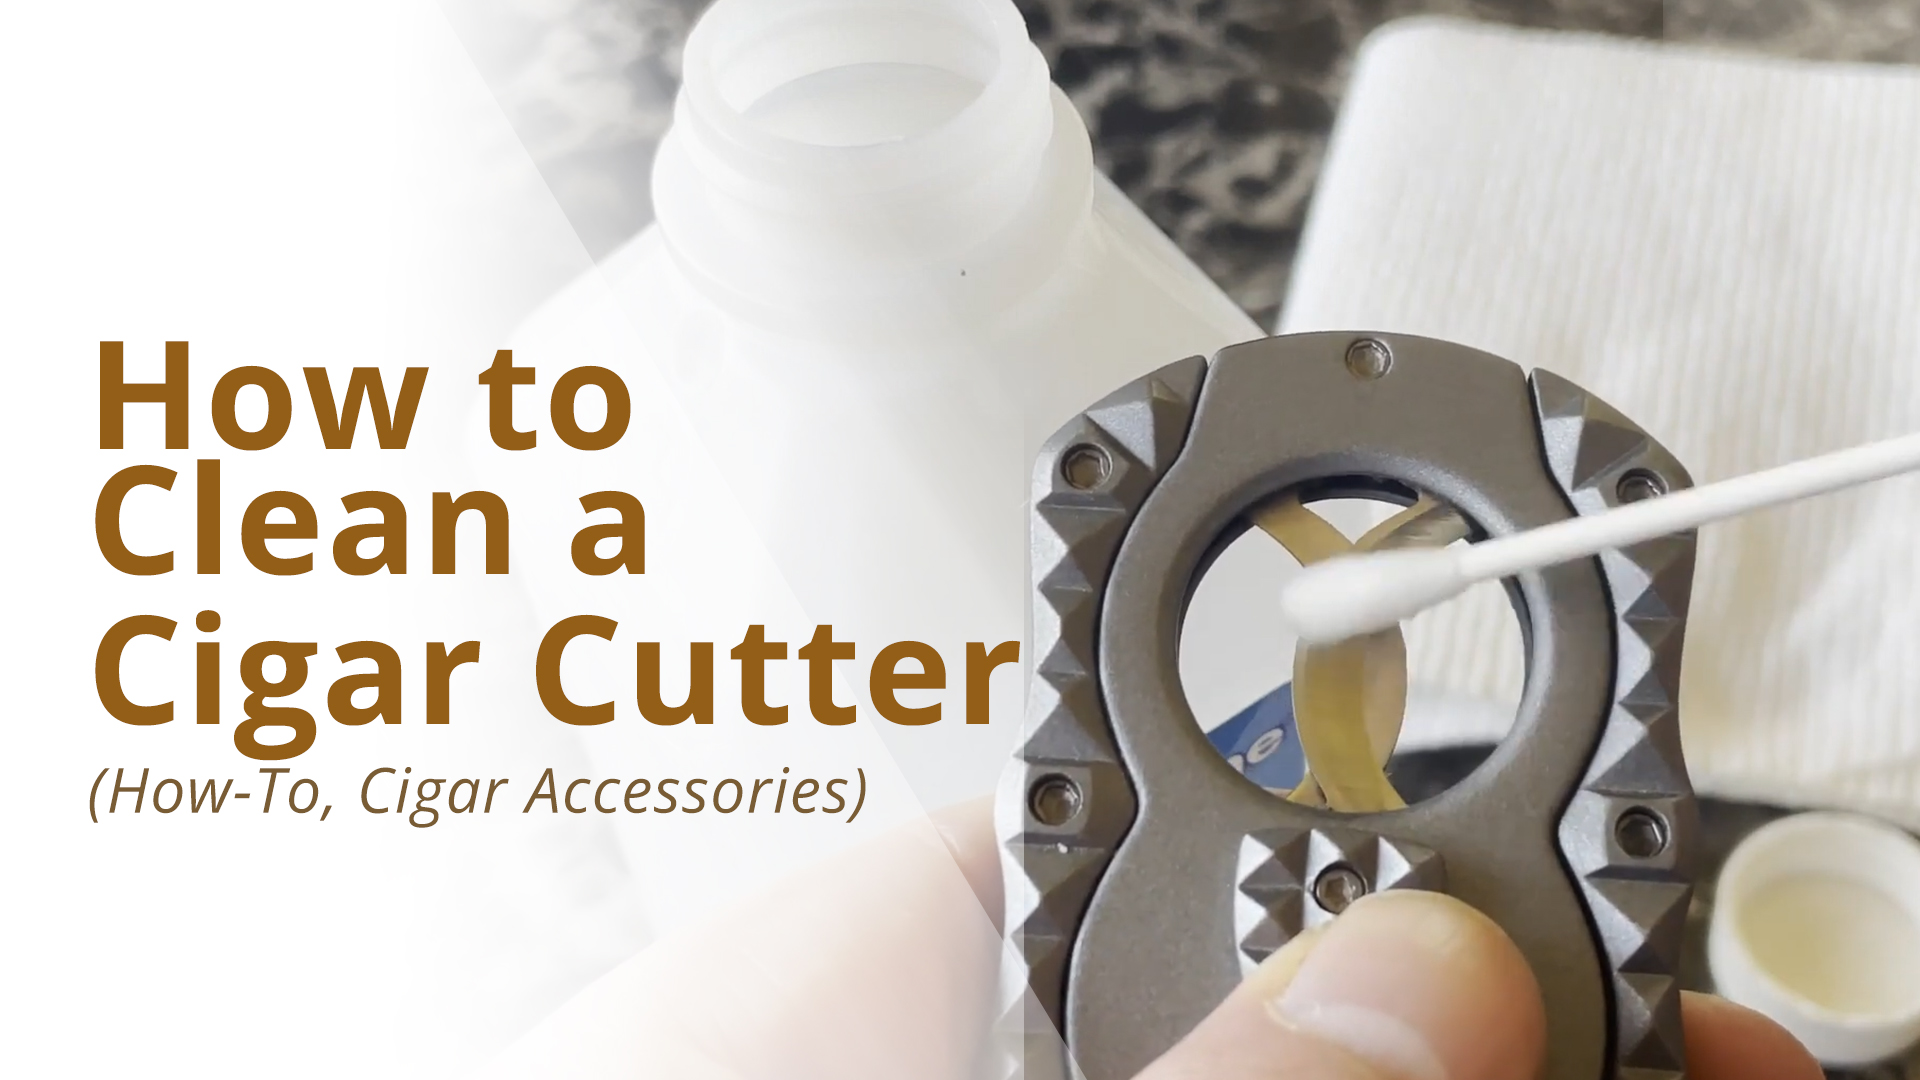 How to clean a cigar cutter